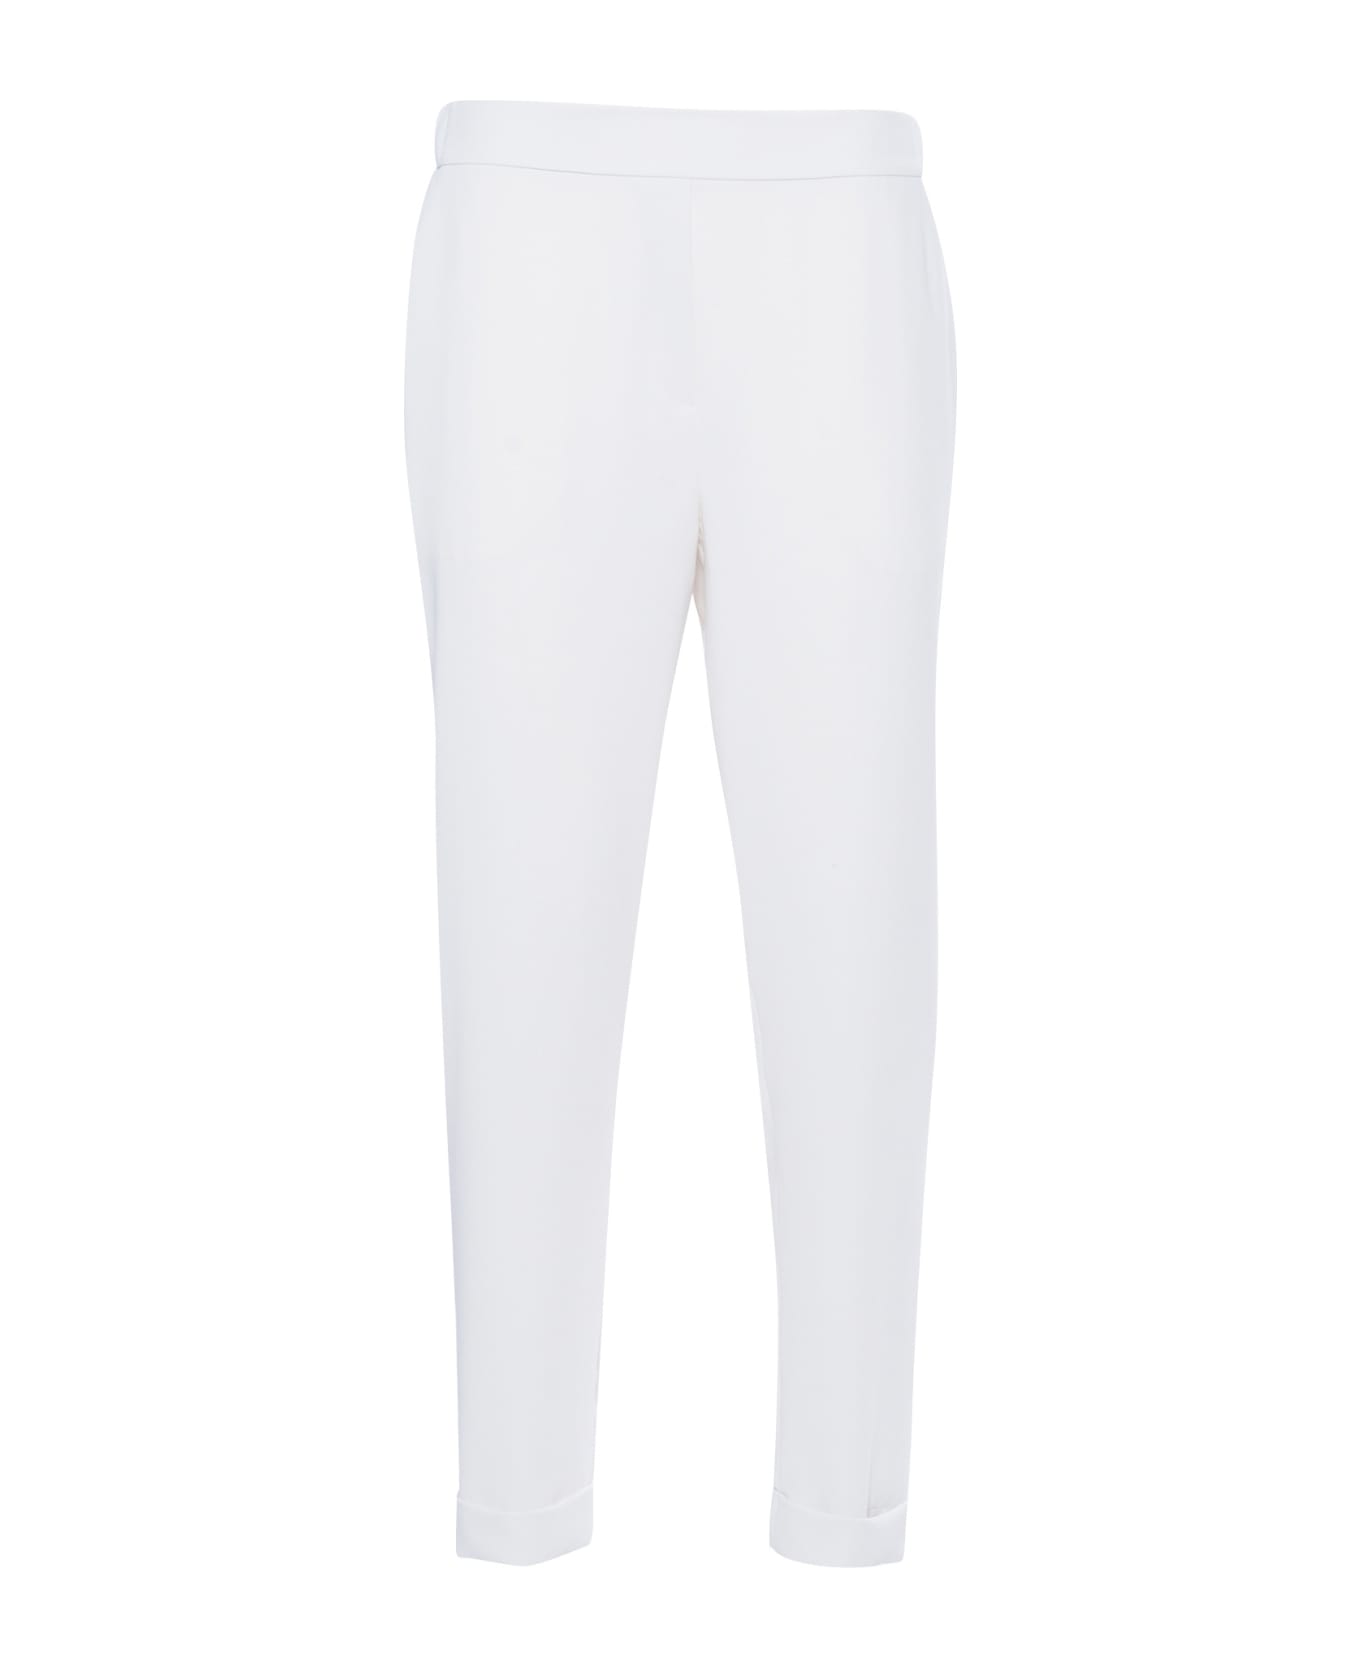 Parosh Elegant Women's Trousers - WHITE